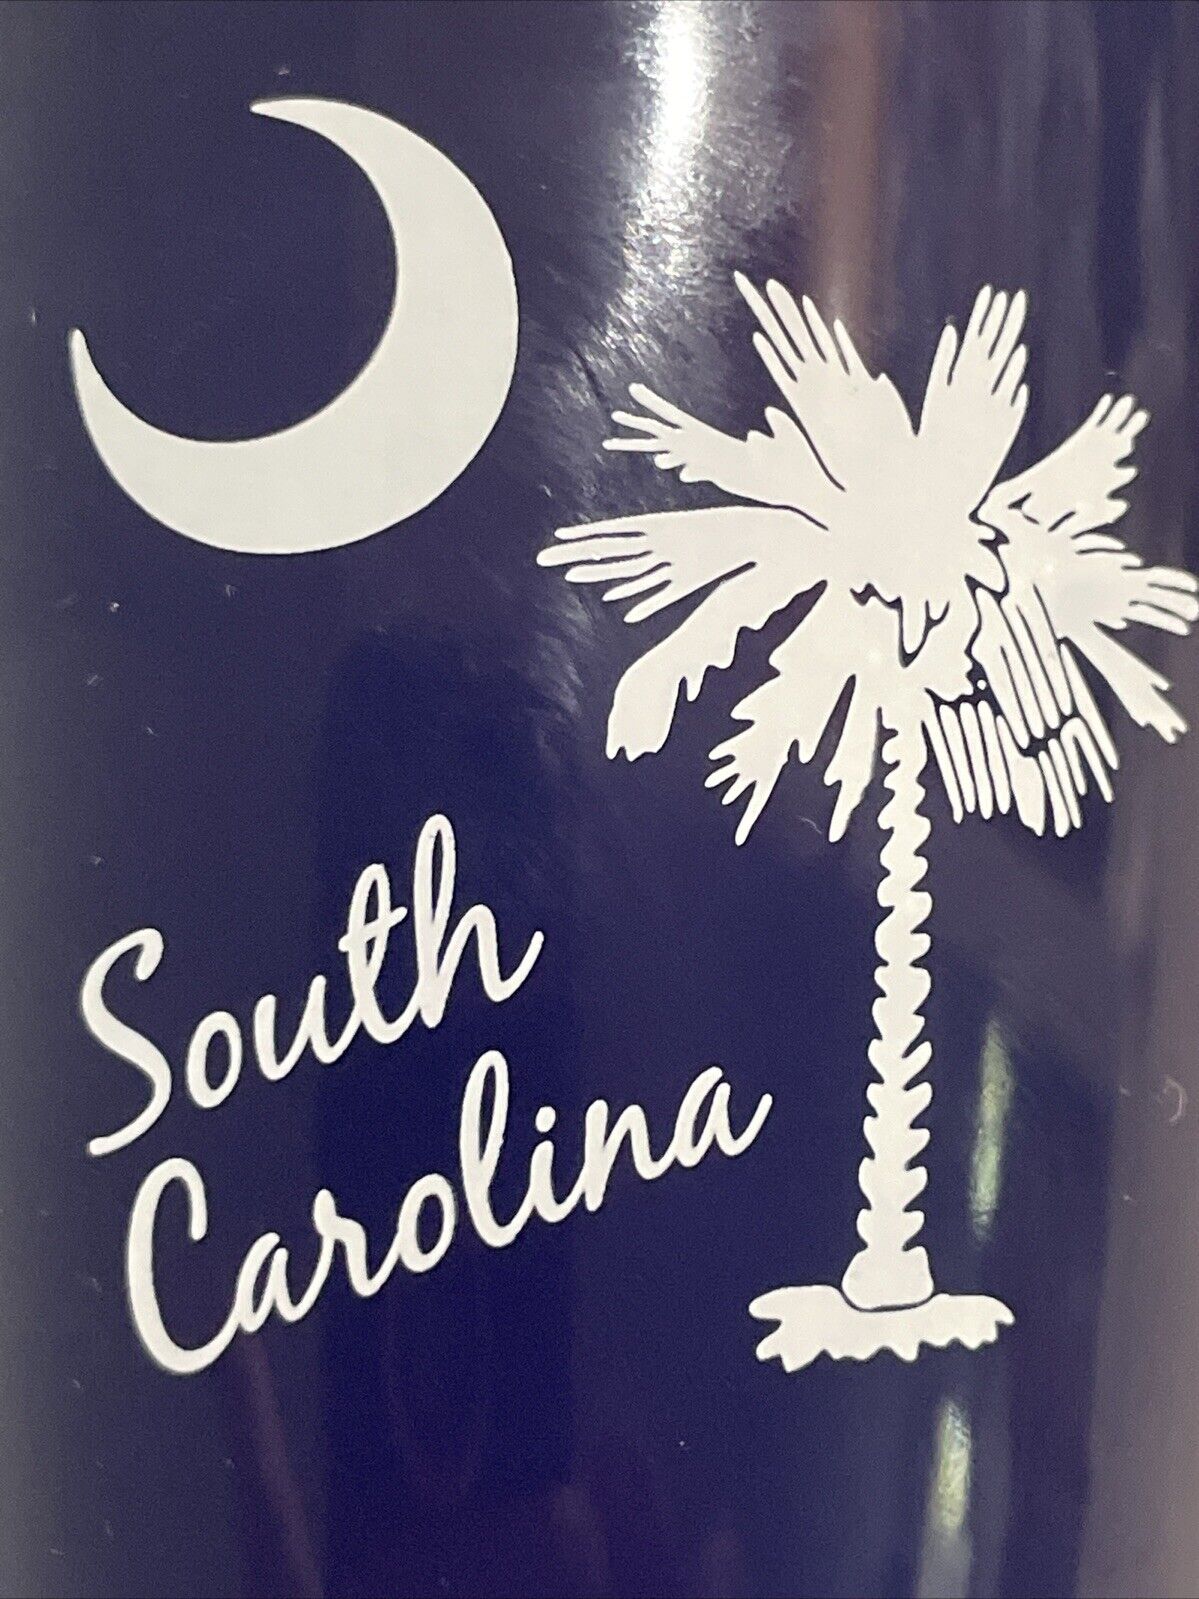 South Carolina palmetto tree and moon - blue - ceramic coffee mug - Never Used